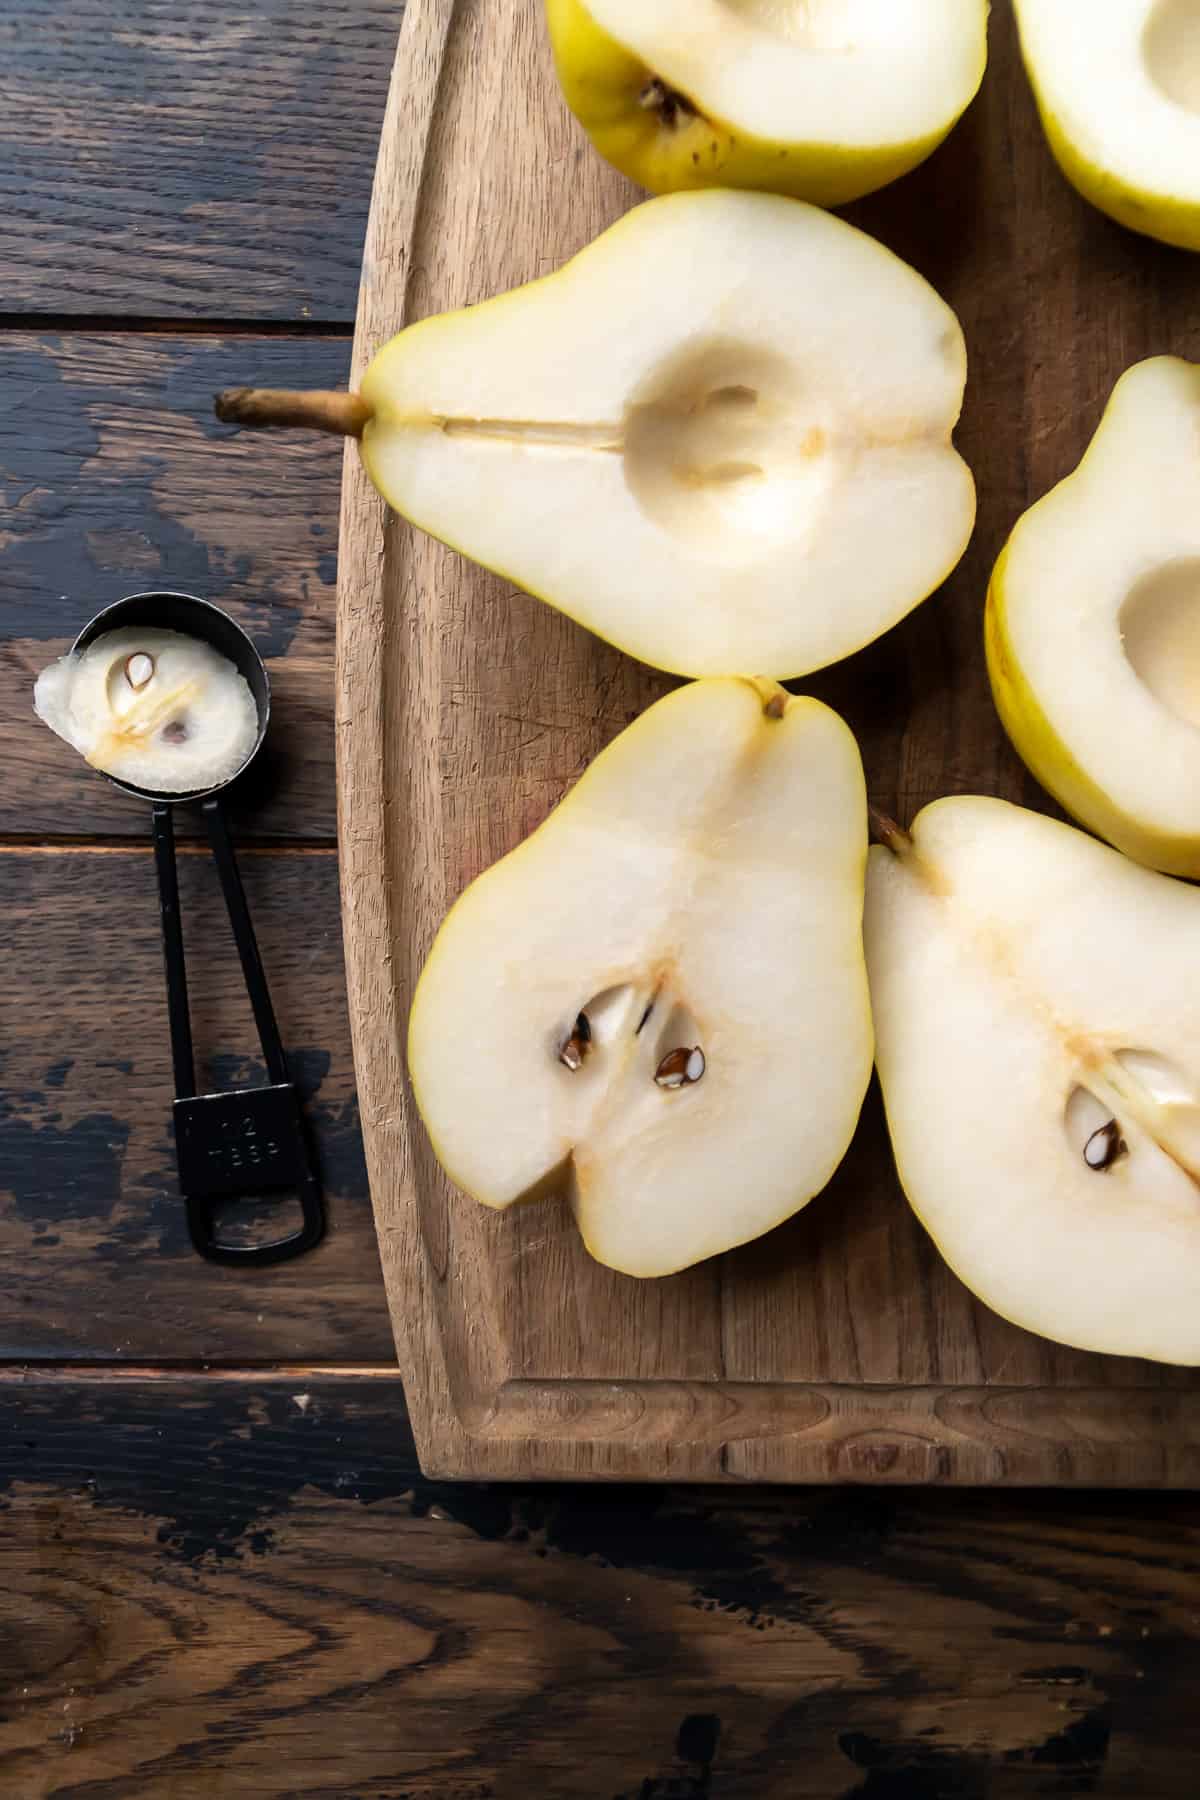 Pear halves cut on a wooden surface.